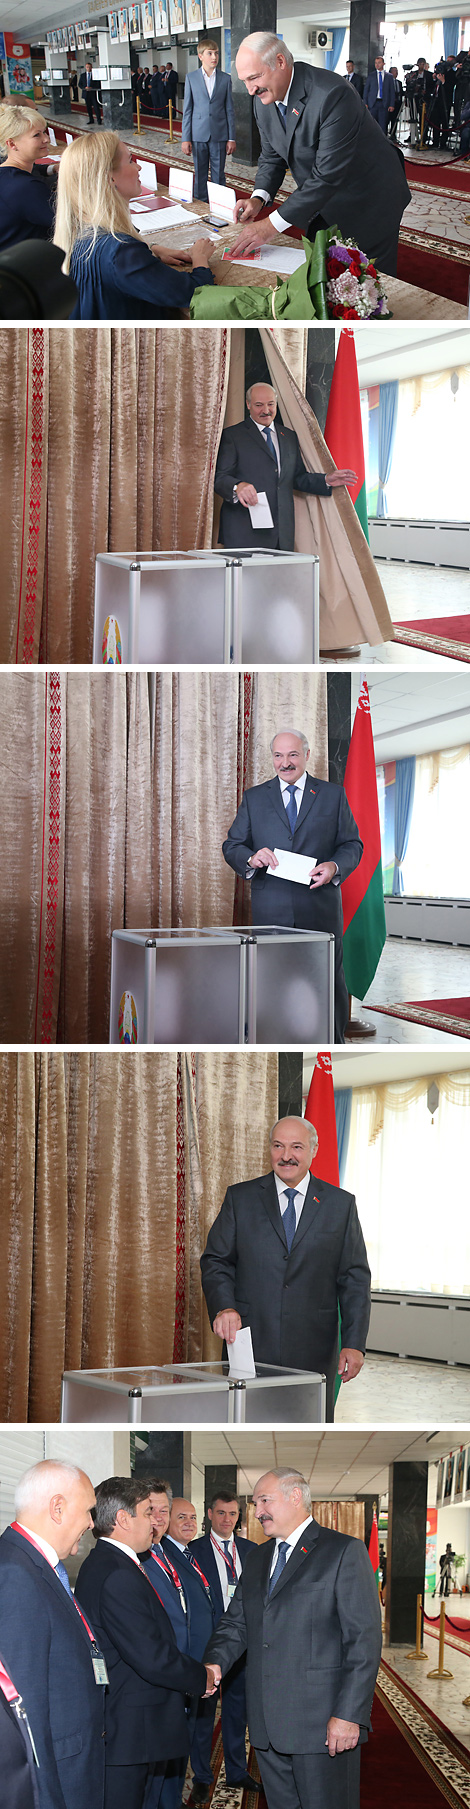 Belarus President Alexander Lukashenko casts his vote